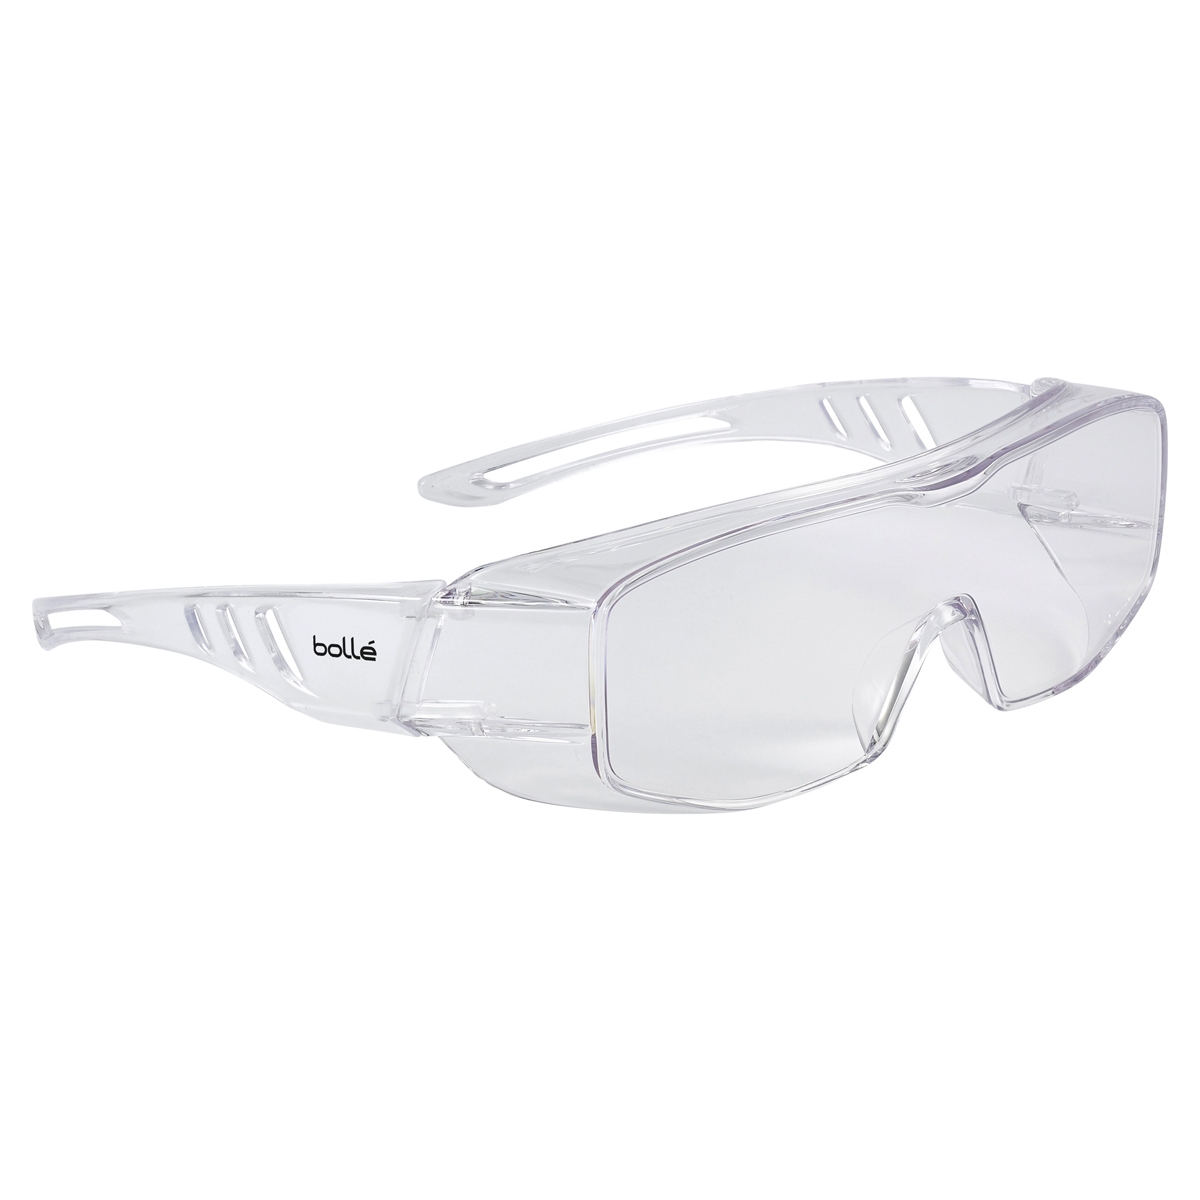 Bolle Overlight Over-The-Glasses Safety Glasses